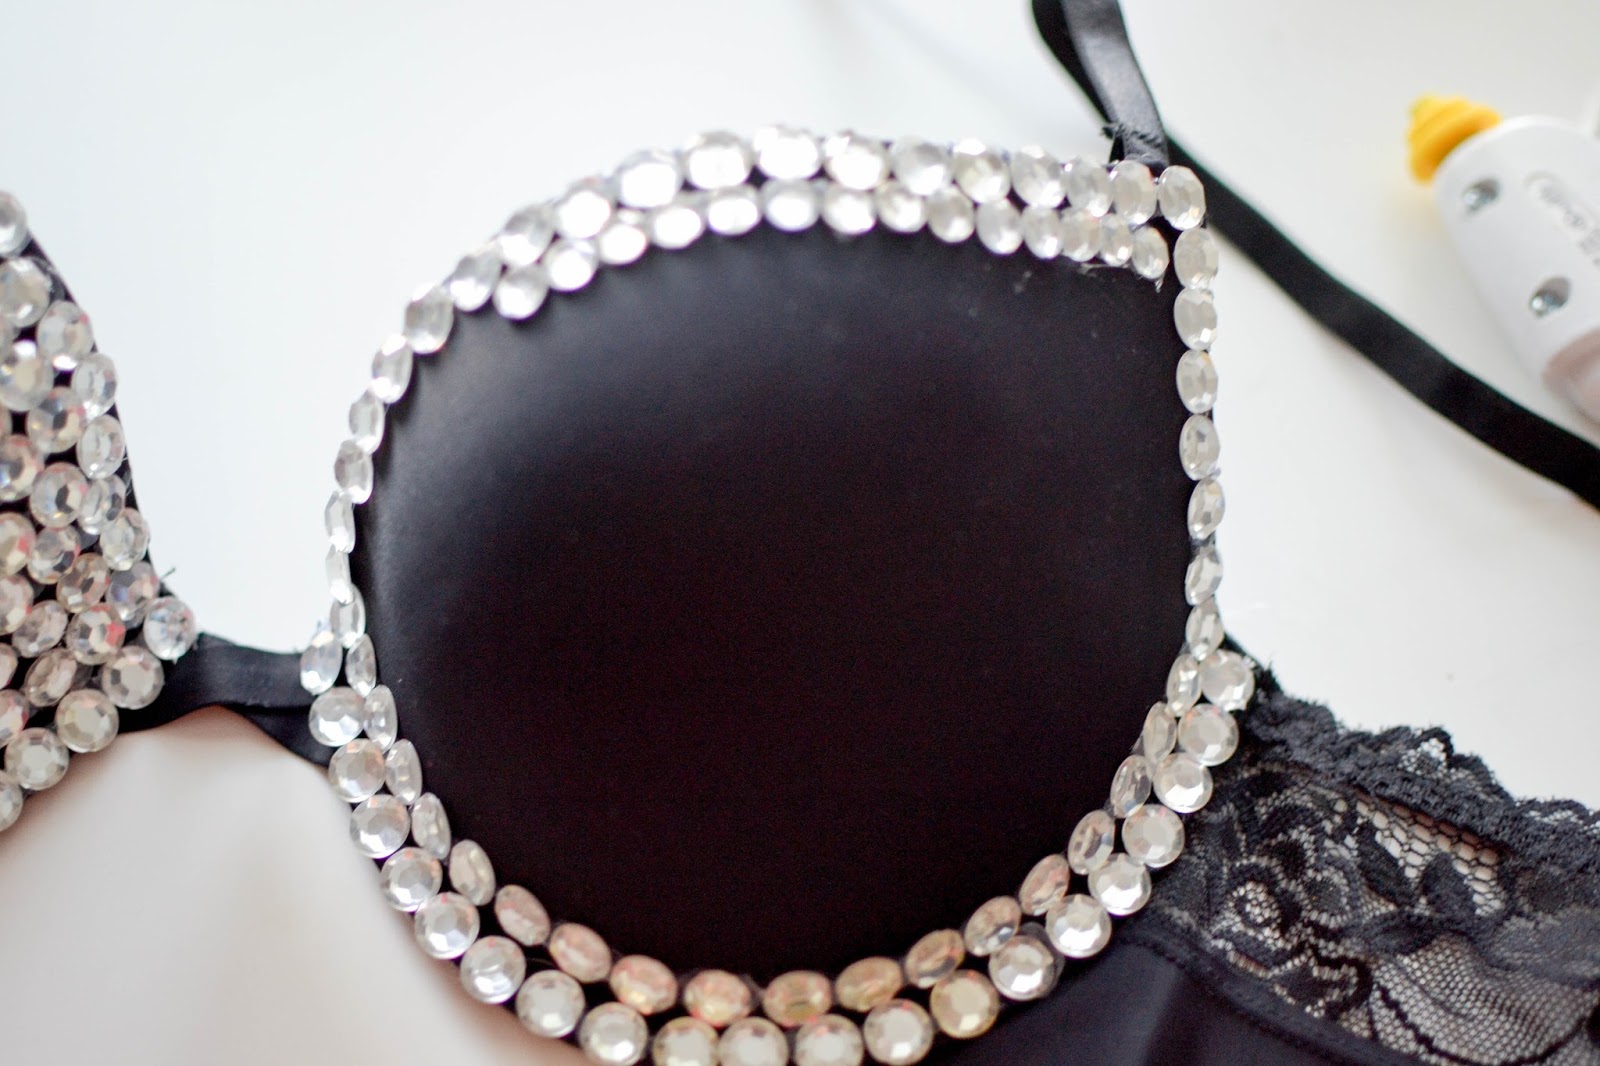 DIY feathered jeweled bra (SELENA COSTUME)